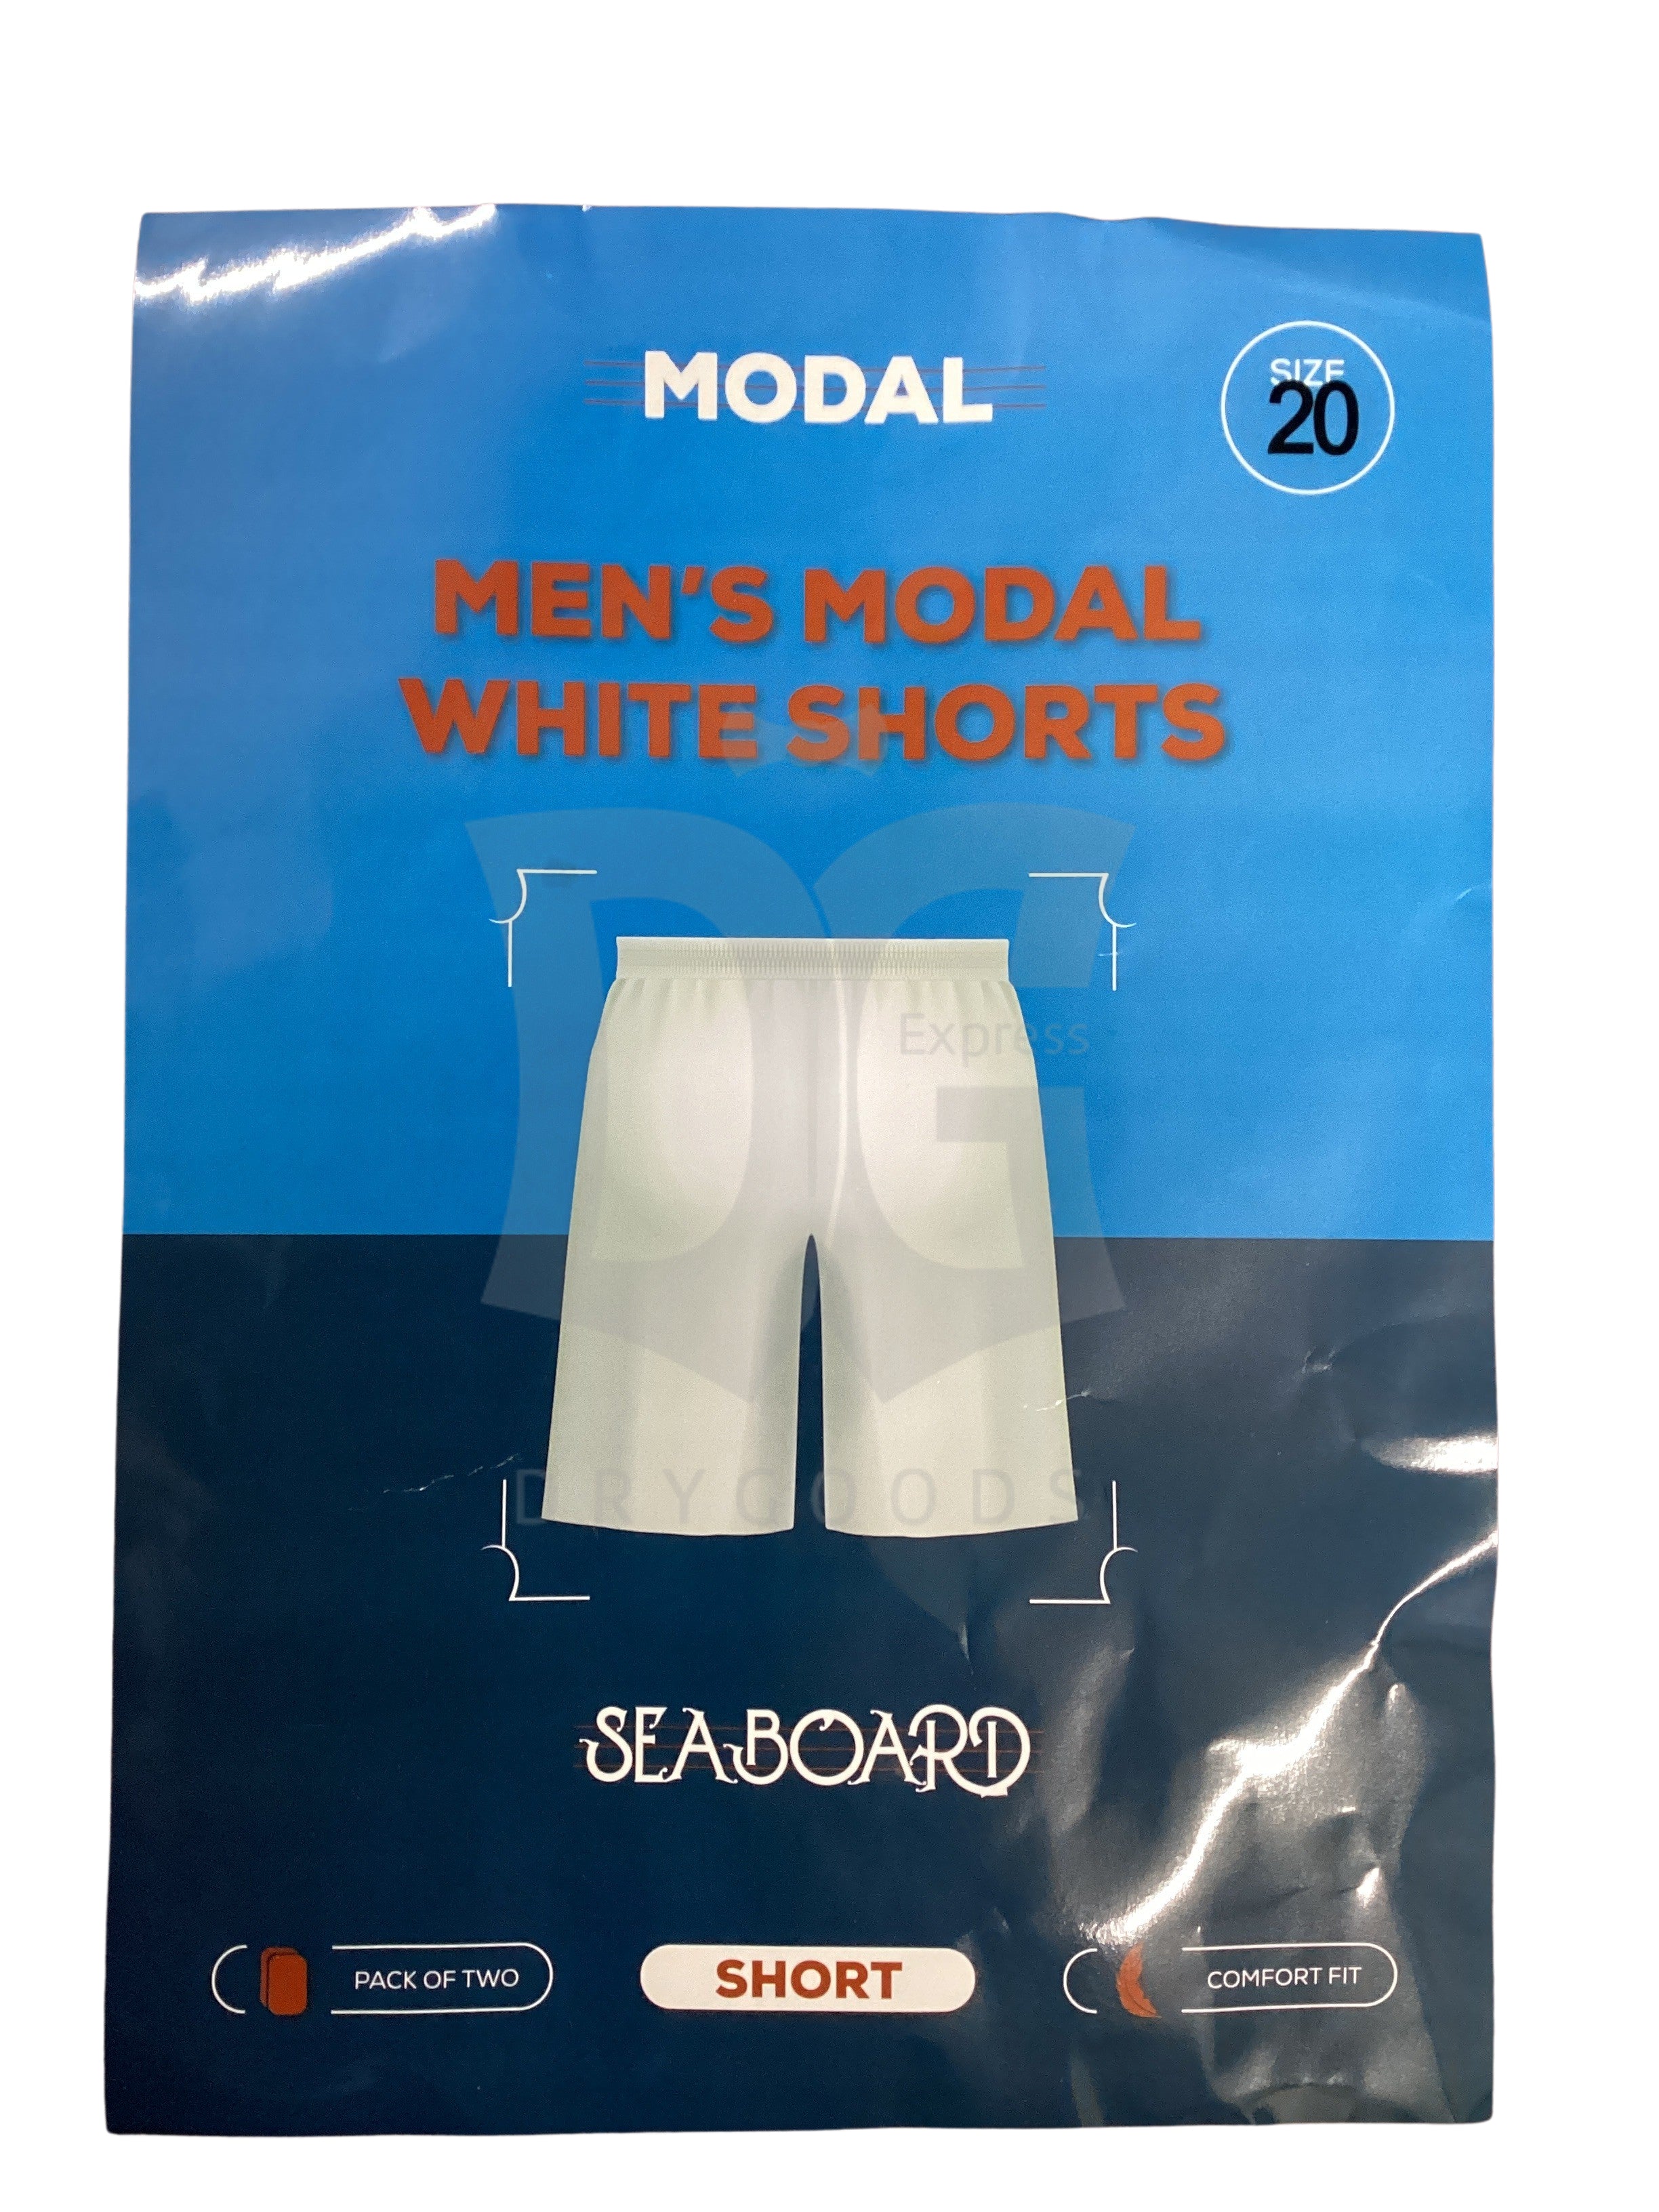 Seaboard Men's Modal Chasidish Boxers